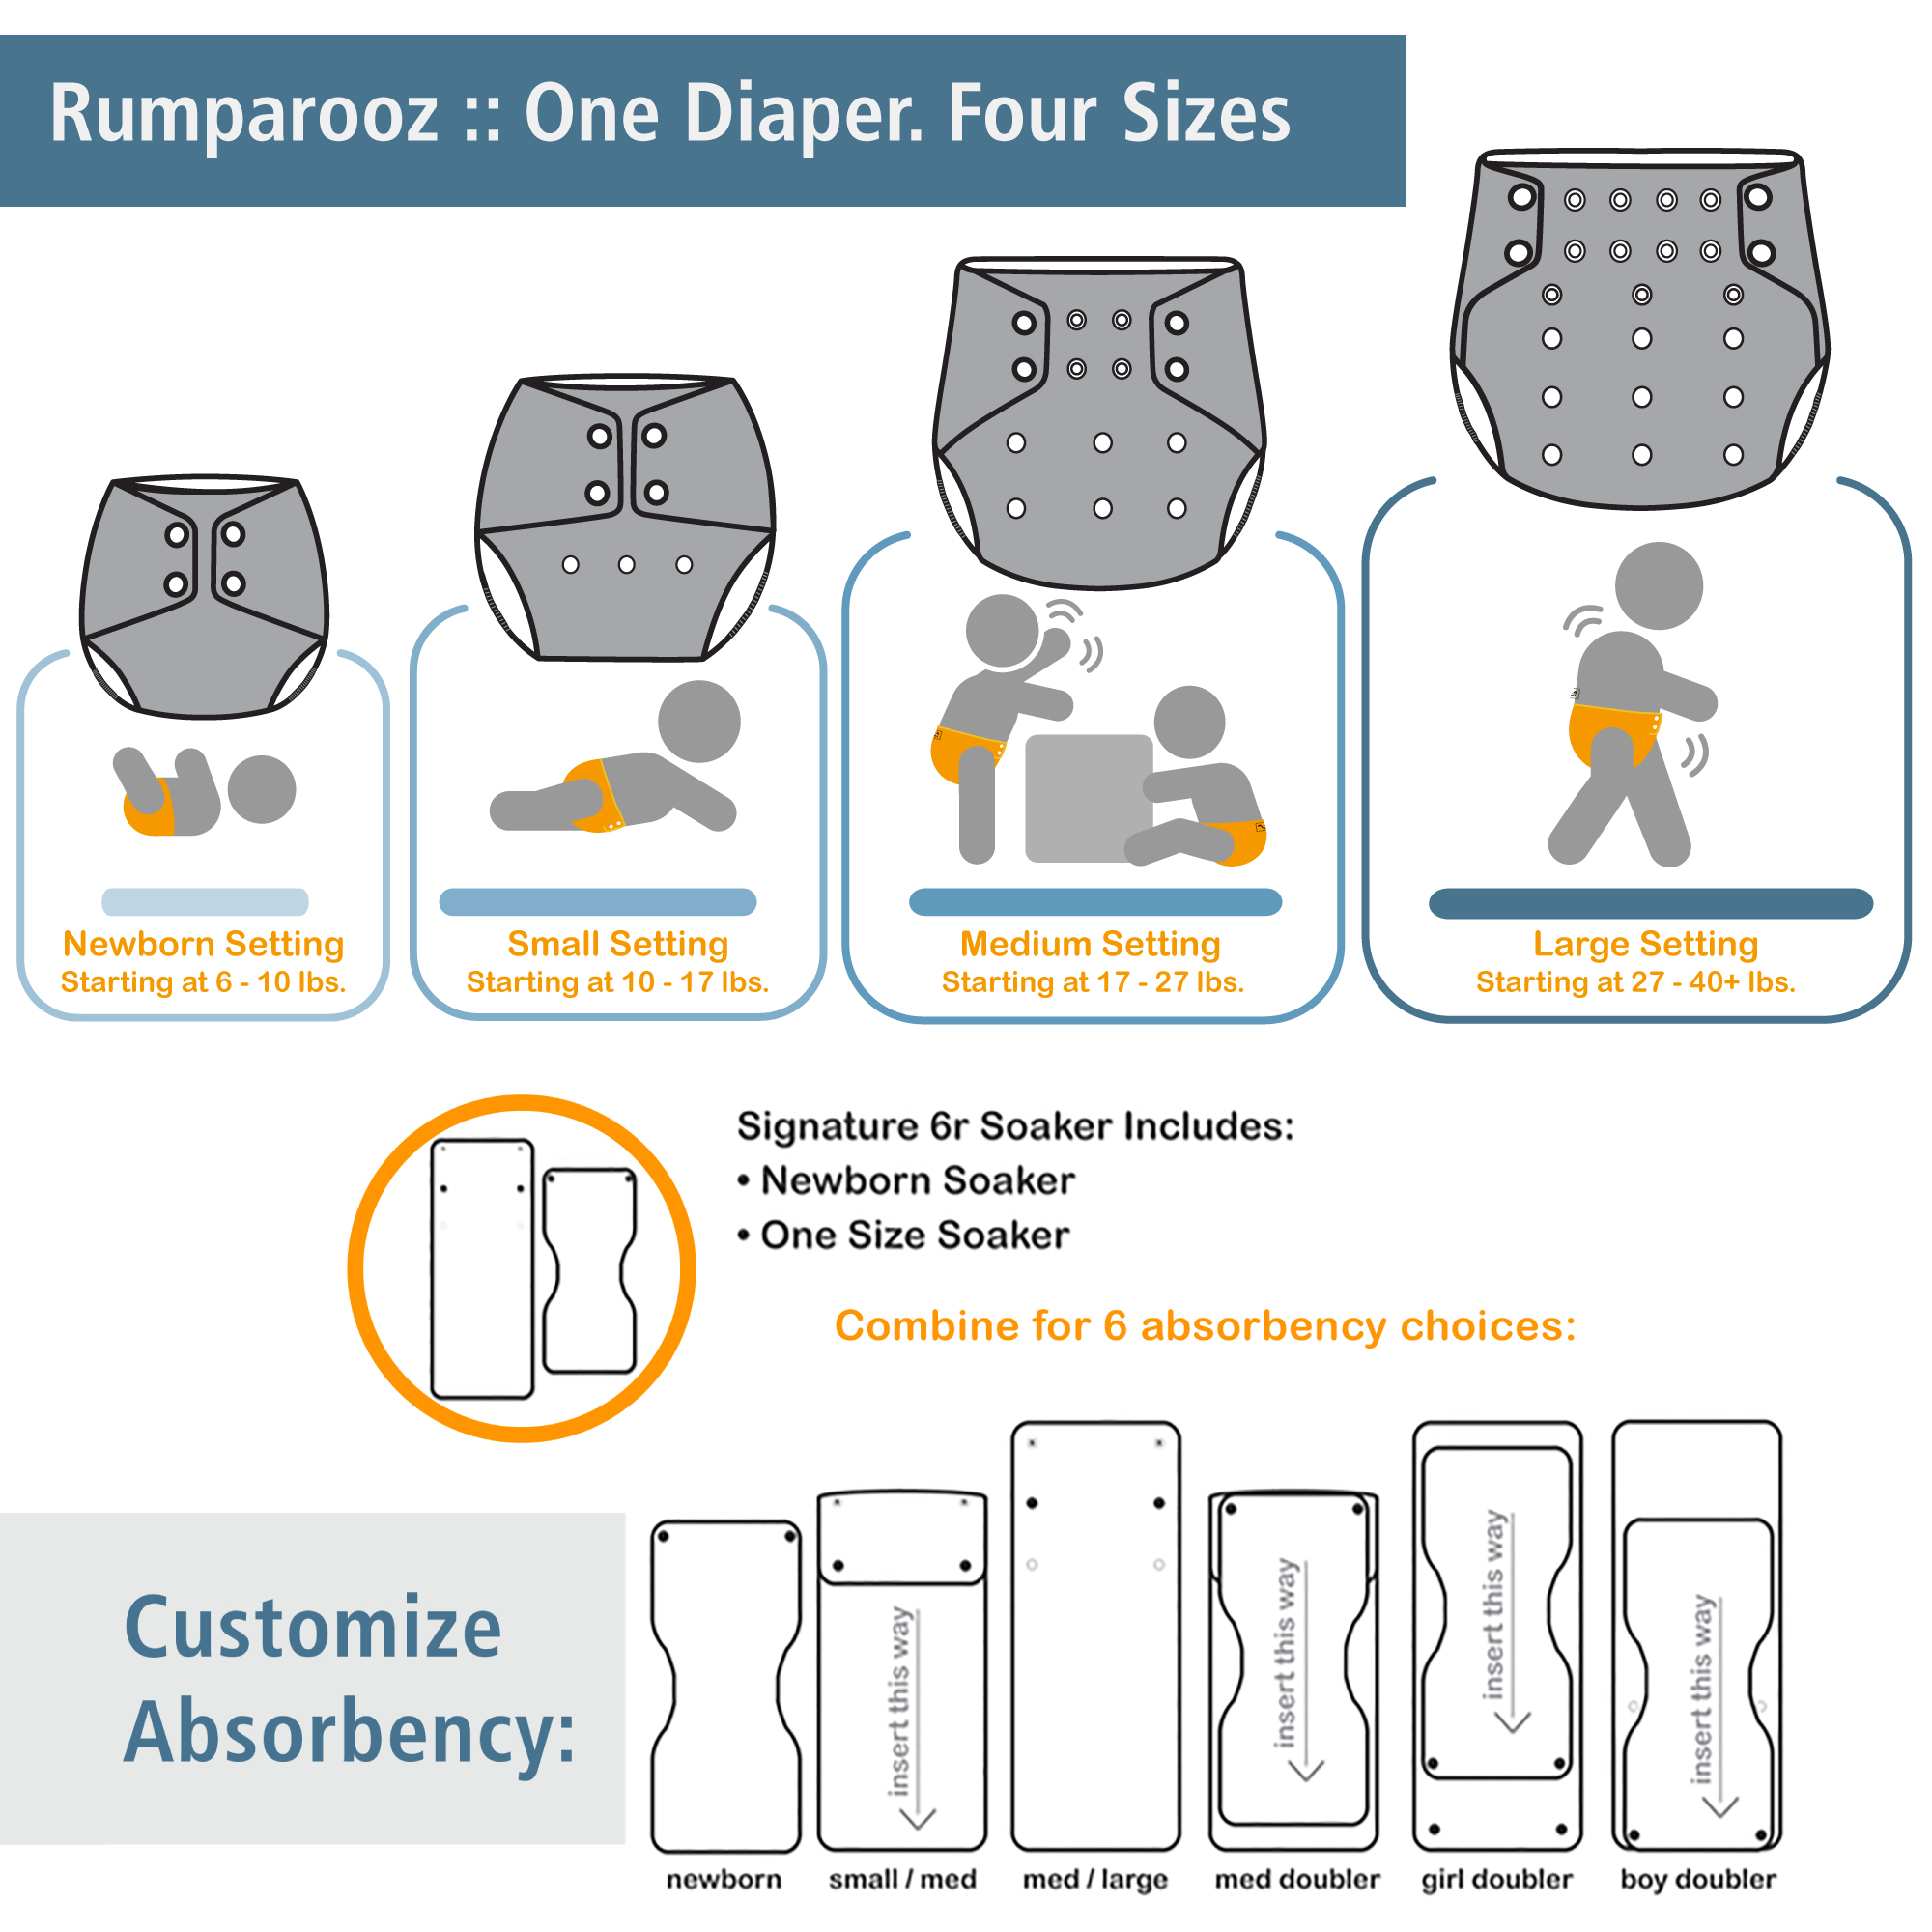 Kanga Care Rumparooz Cloth Diaper Reusable One Size Pocket Diaper with patented Inner Double Gusset 2 pcs Microfiber Insert Soaker (6-40+ lbs) - Quinn - image 3 of 9